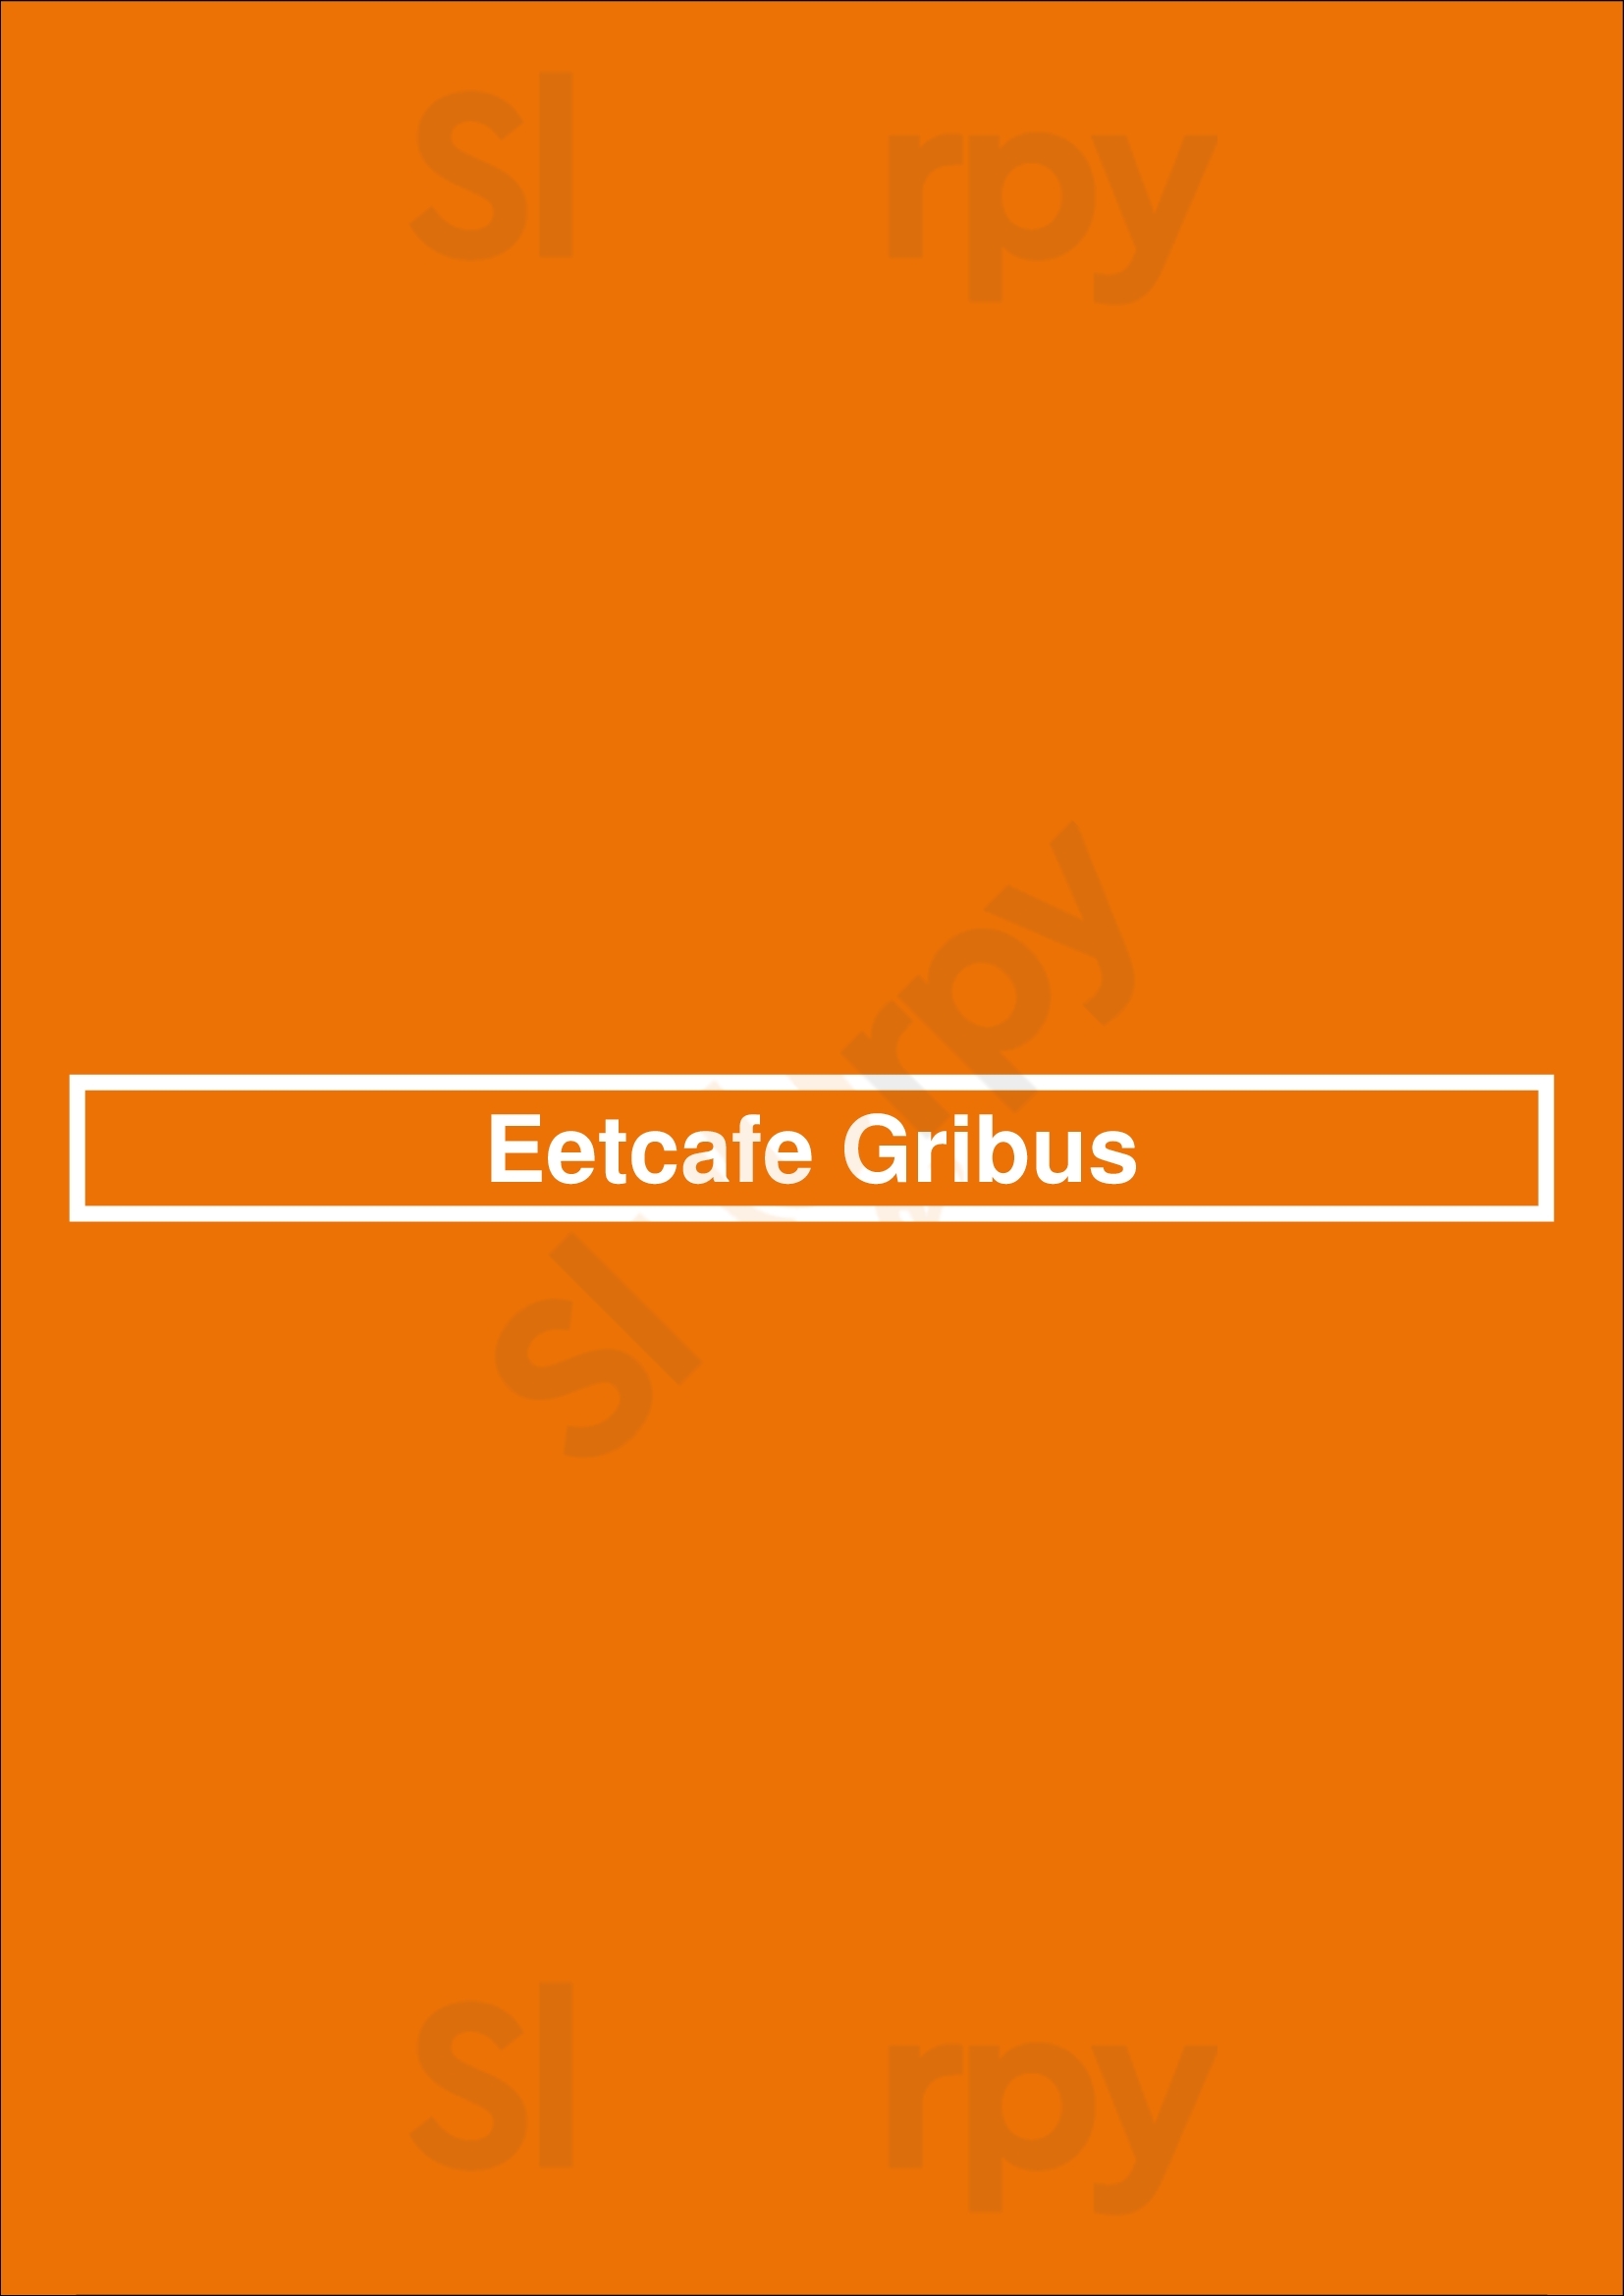 Eetcafe Gribus Barneveld Menu - 1